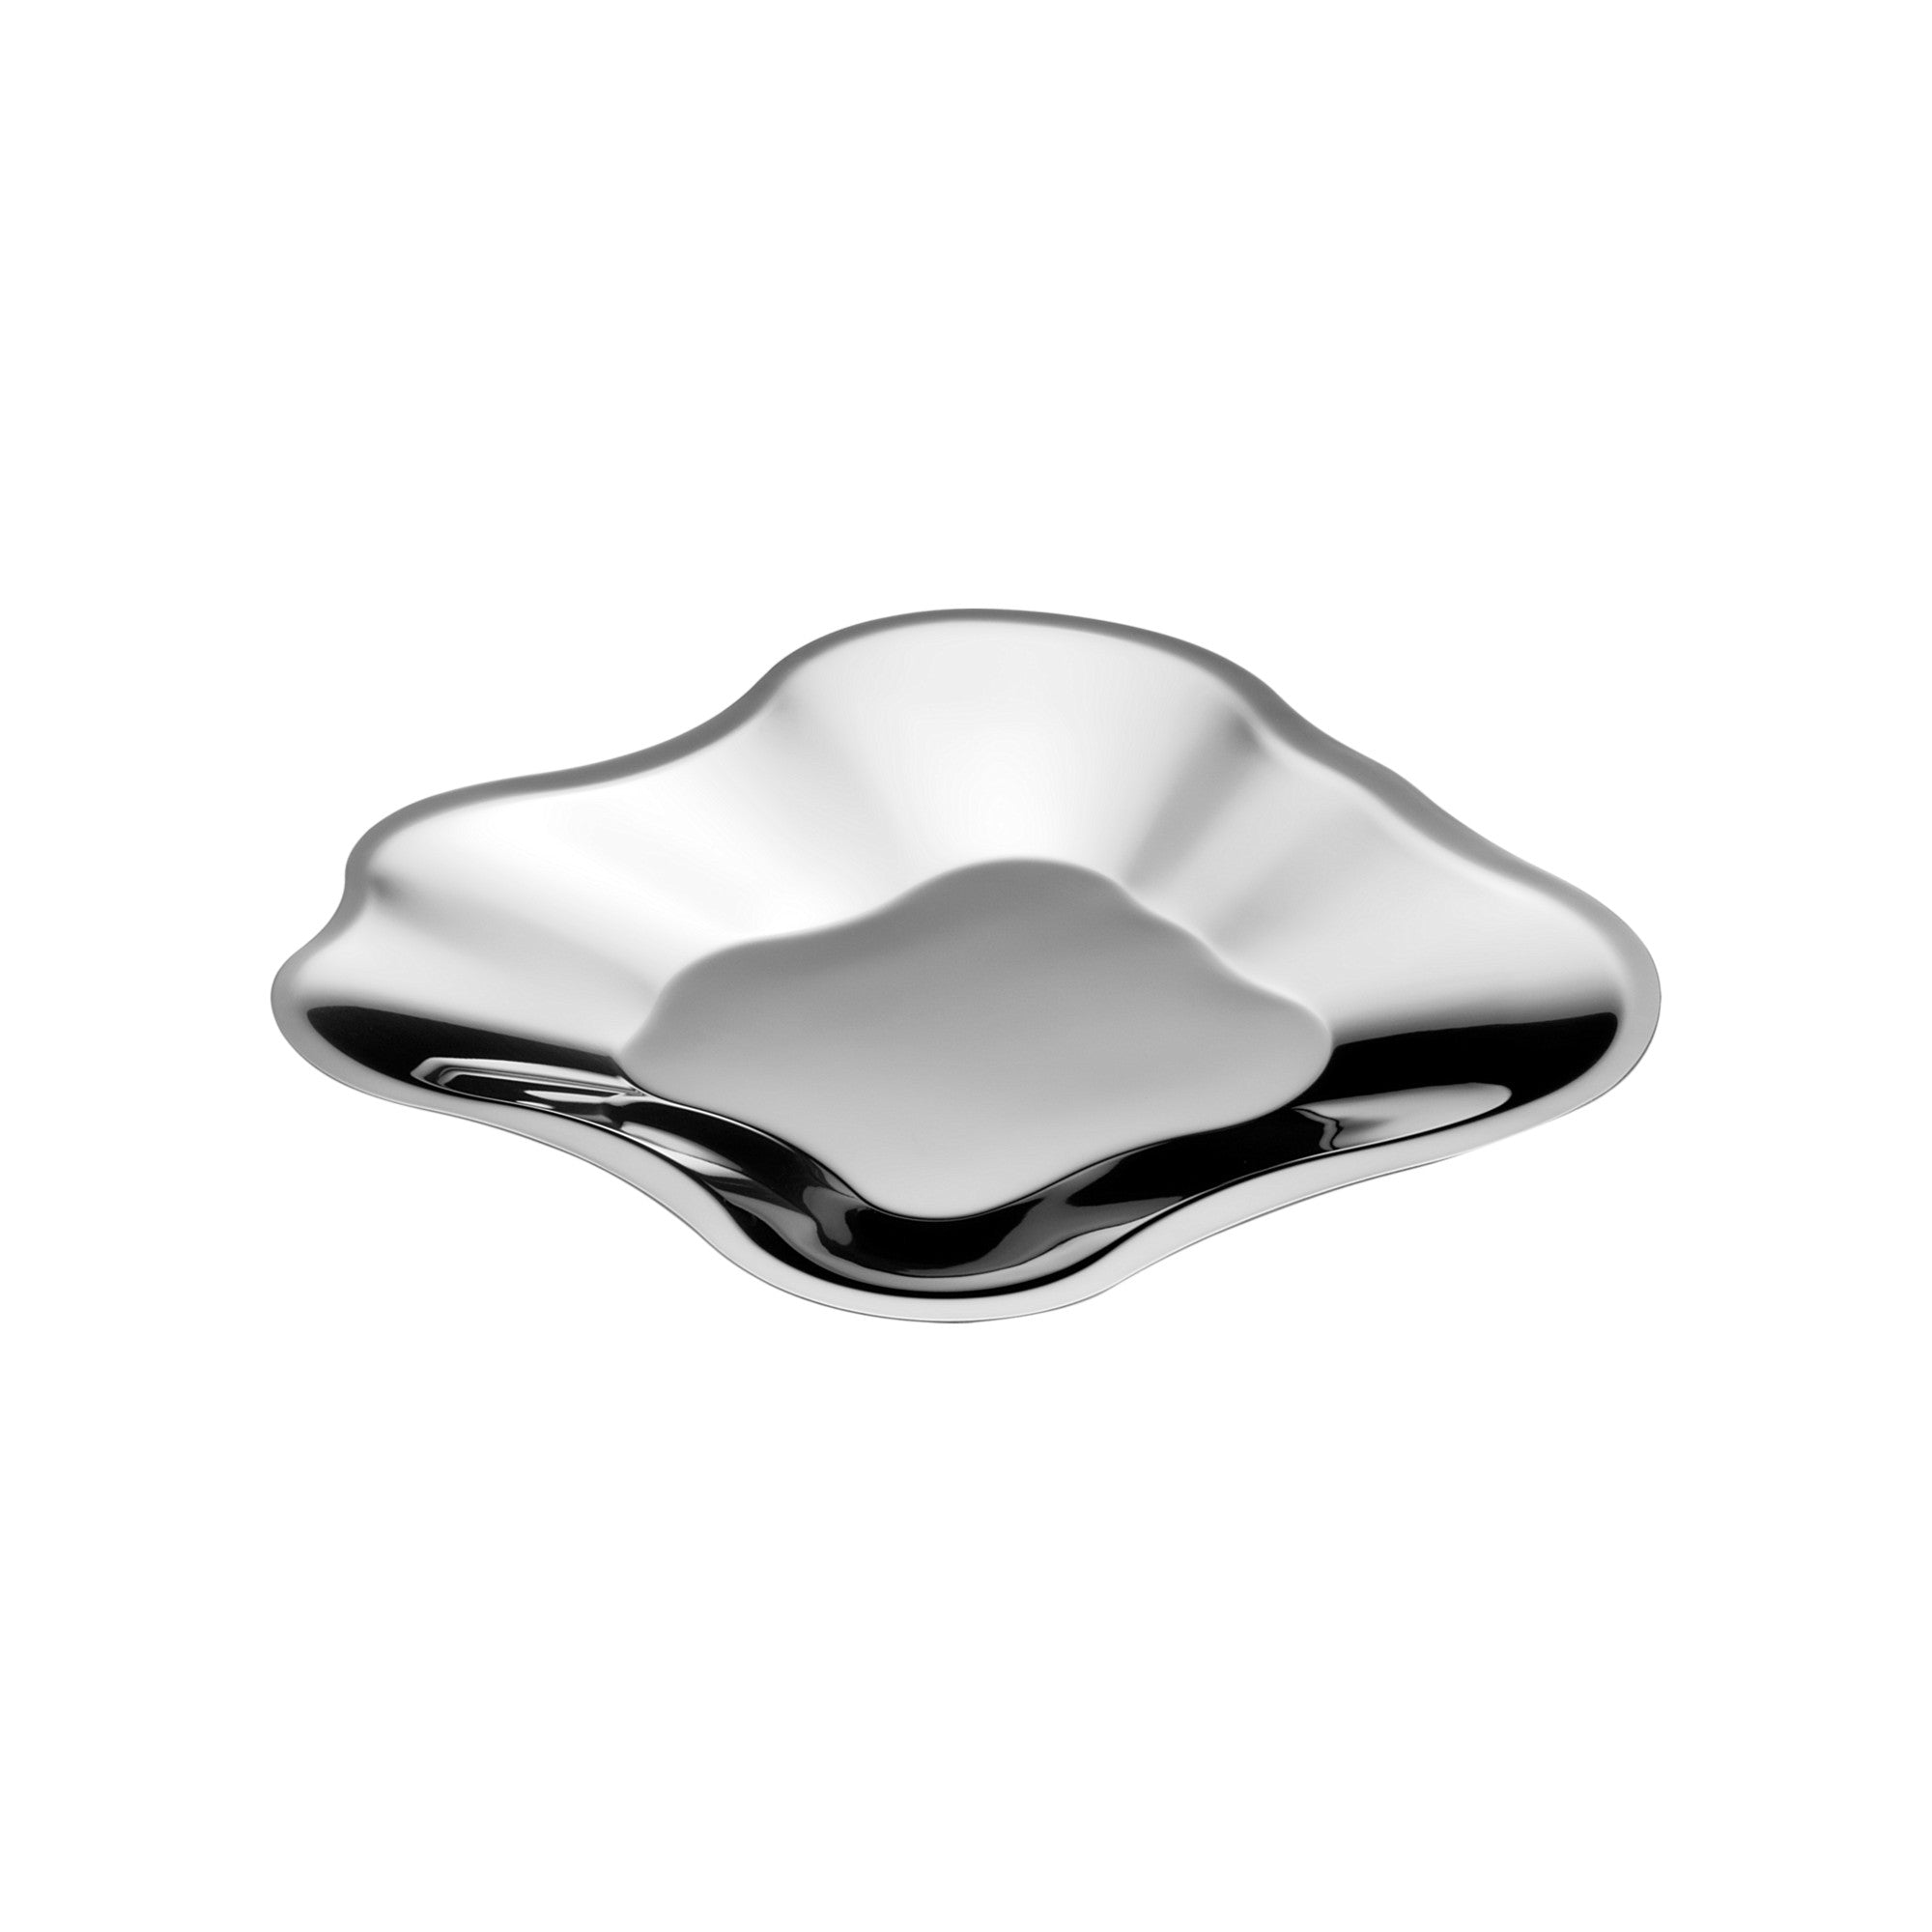 Iittala Serving Bowls Stainless Steel Alvar Aalto